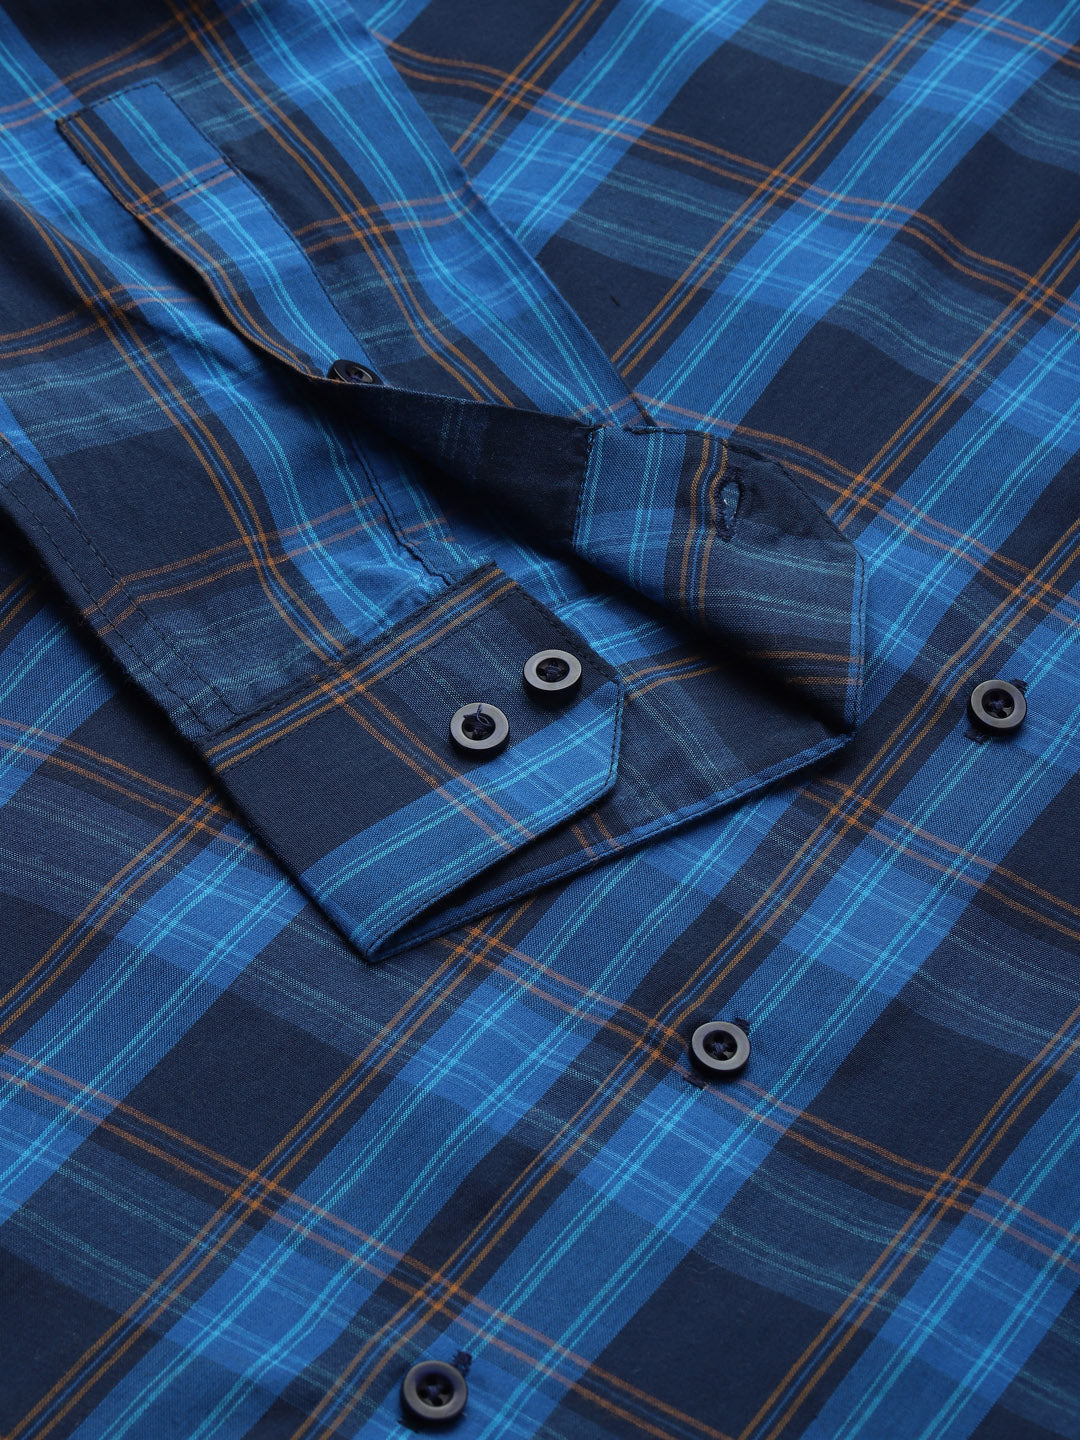 Men's Cotton Navy & Royal blue Casual Shirt